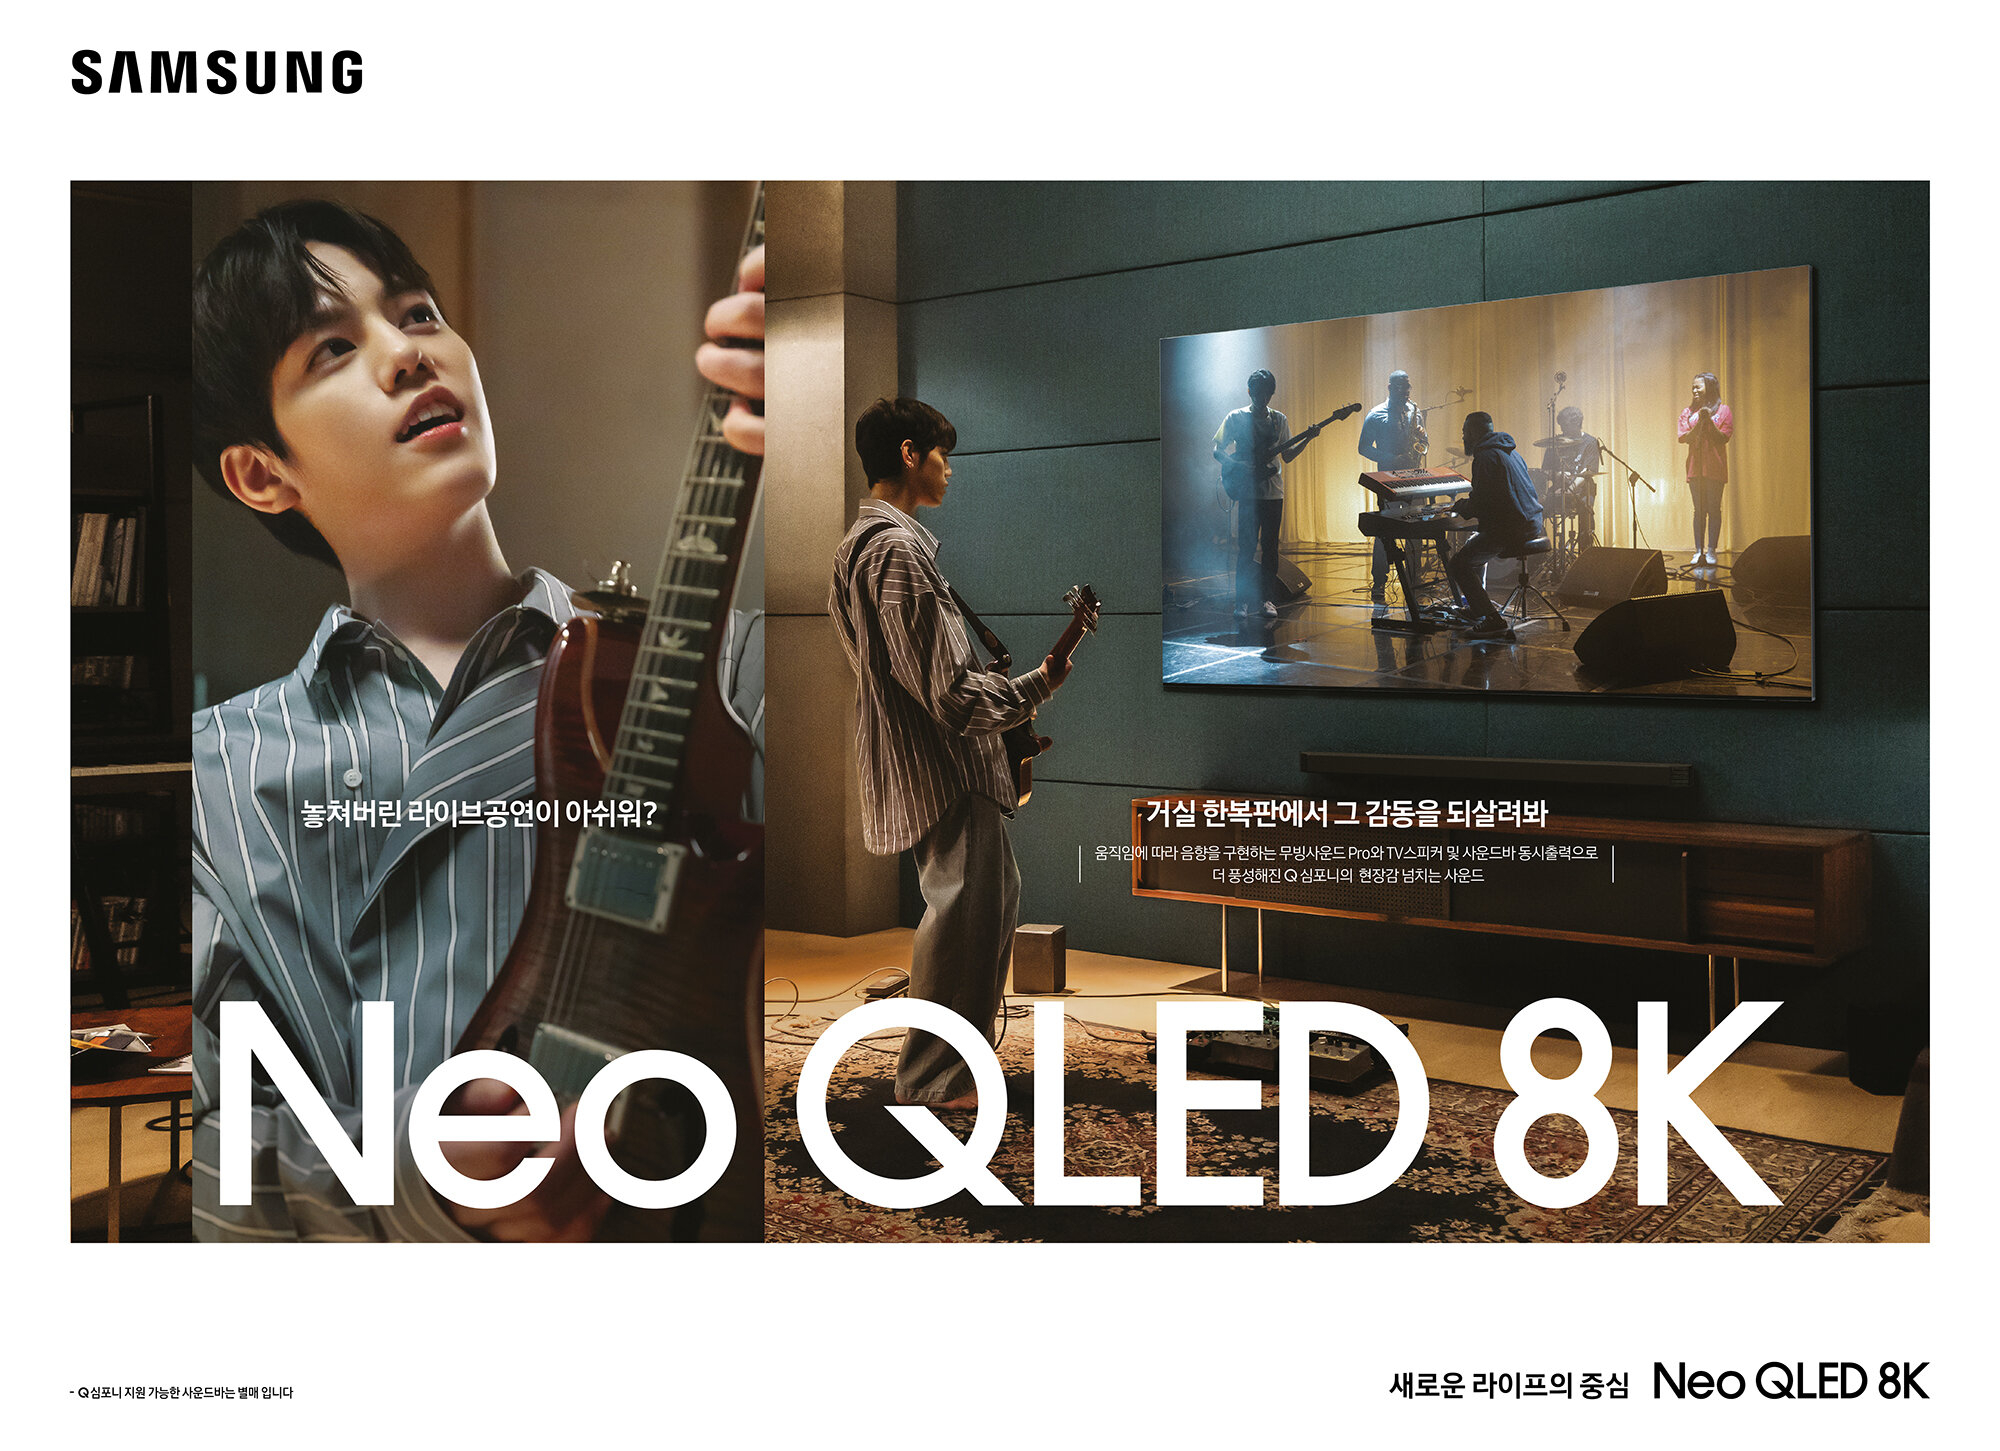 Neo QLED_layout Final-01.jpg